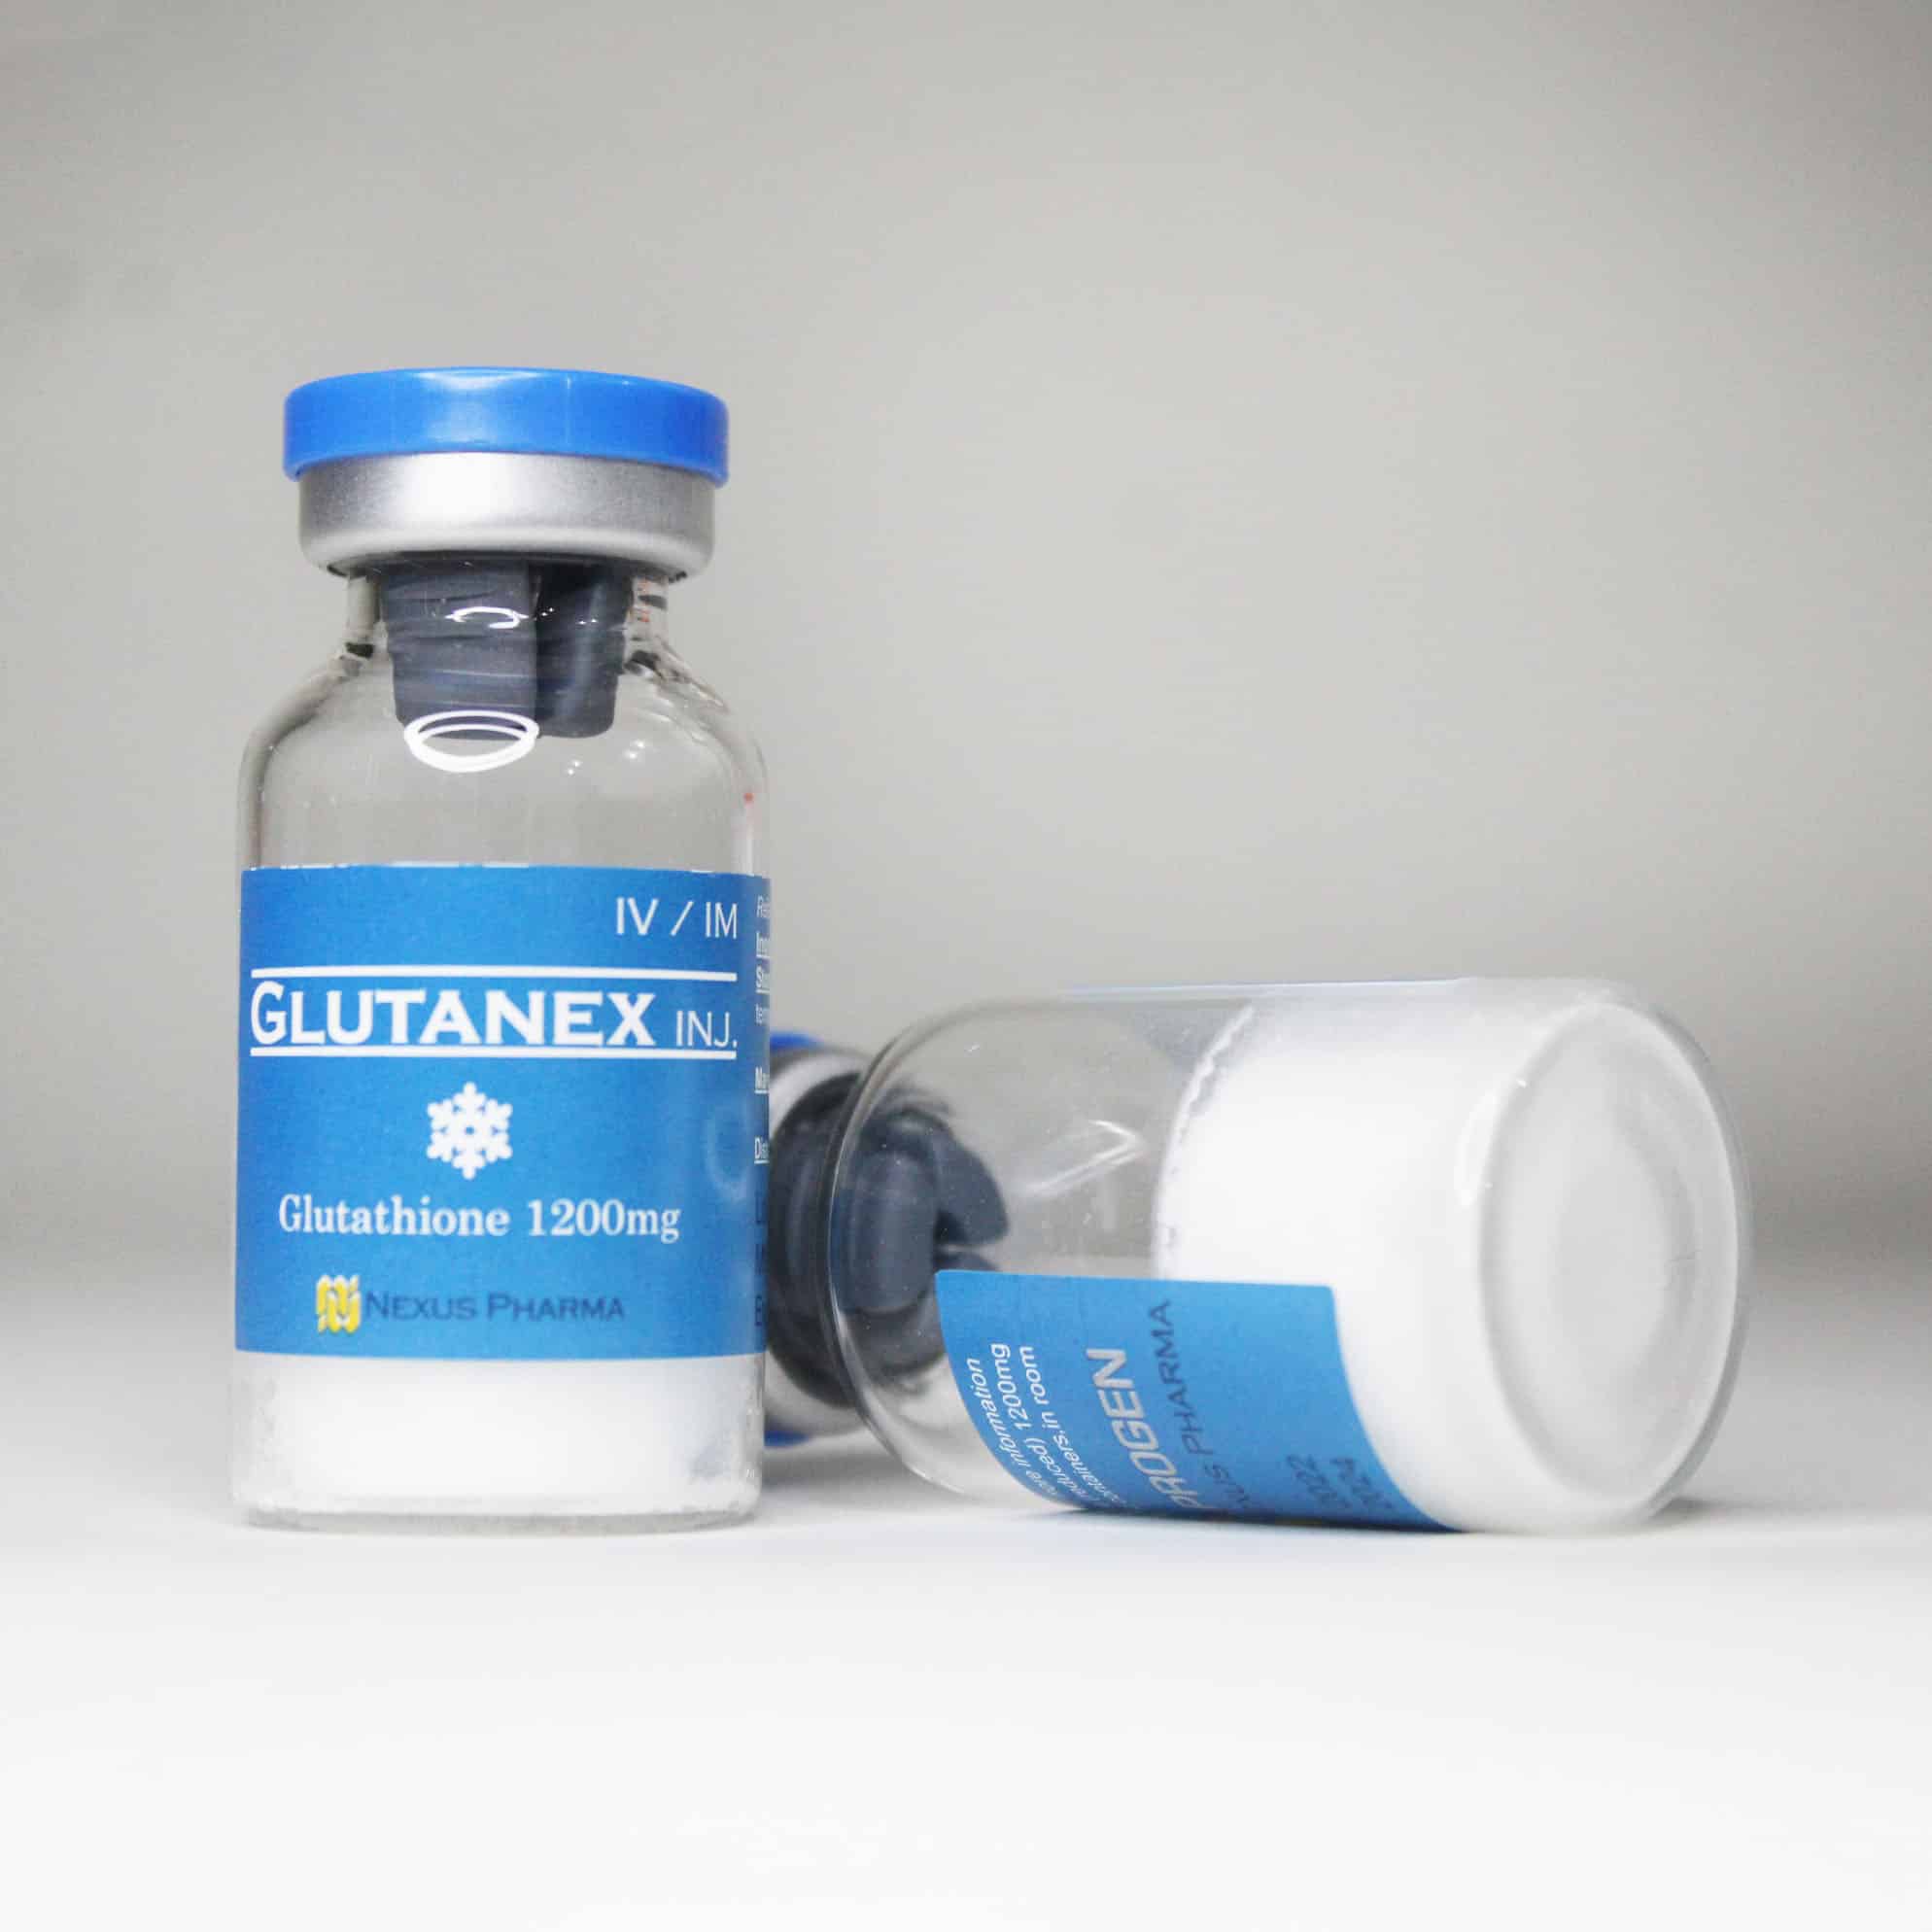 Glutanex 1200 mg vials.